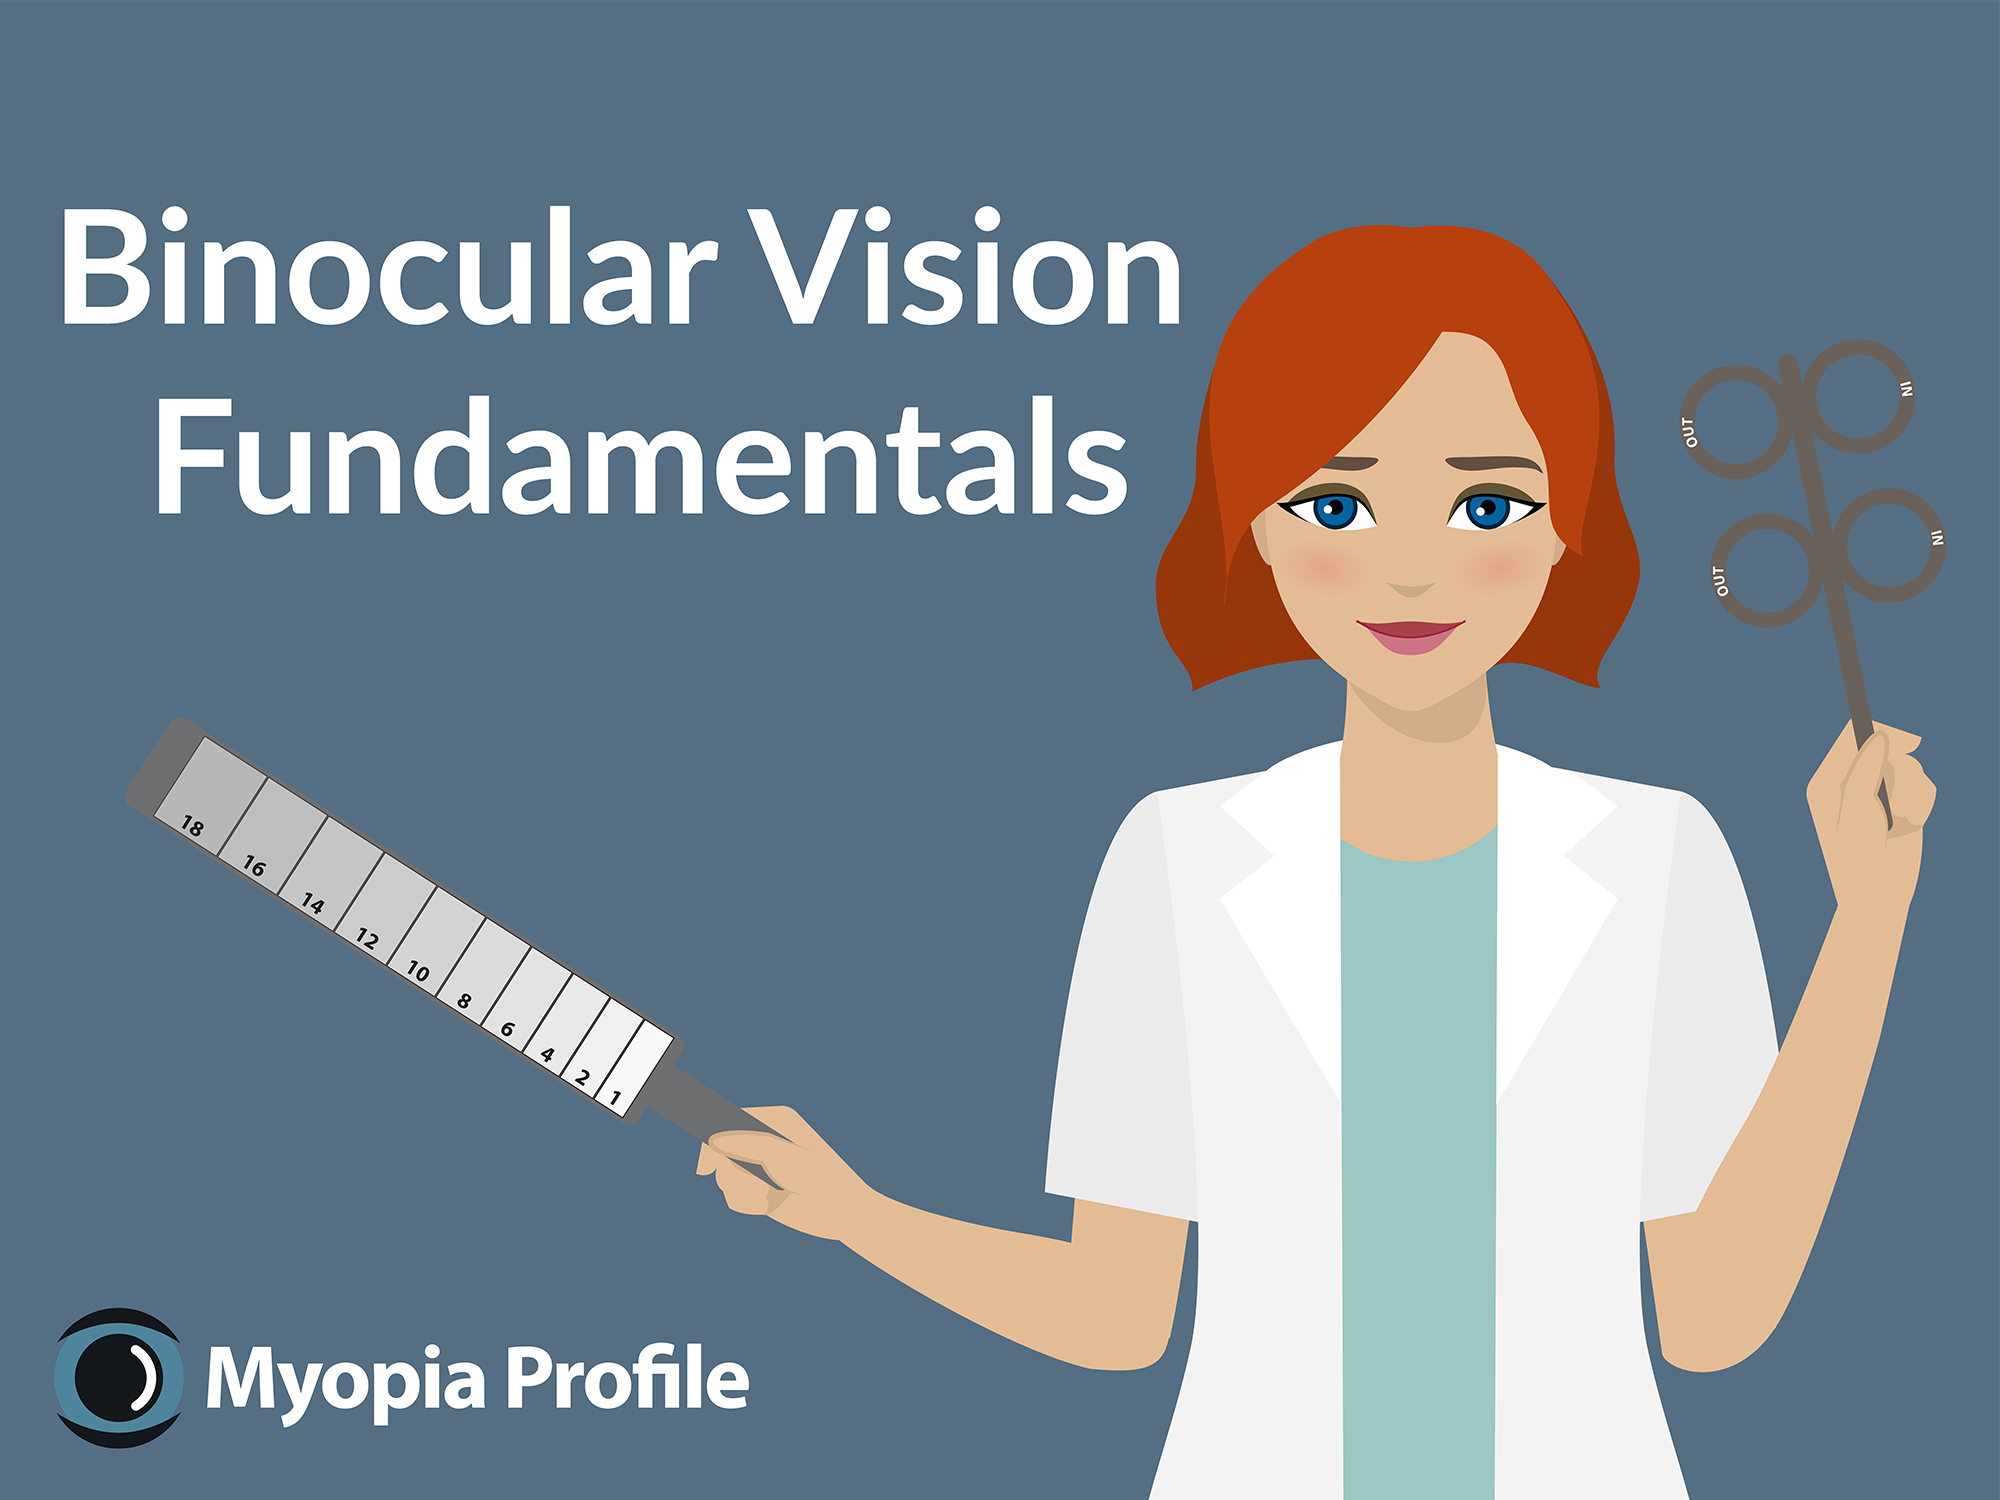 Binocular Vision Fundamentals